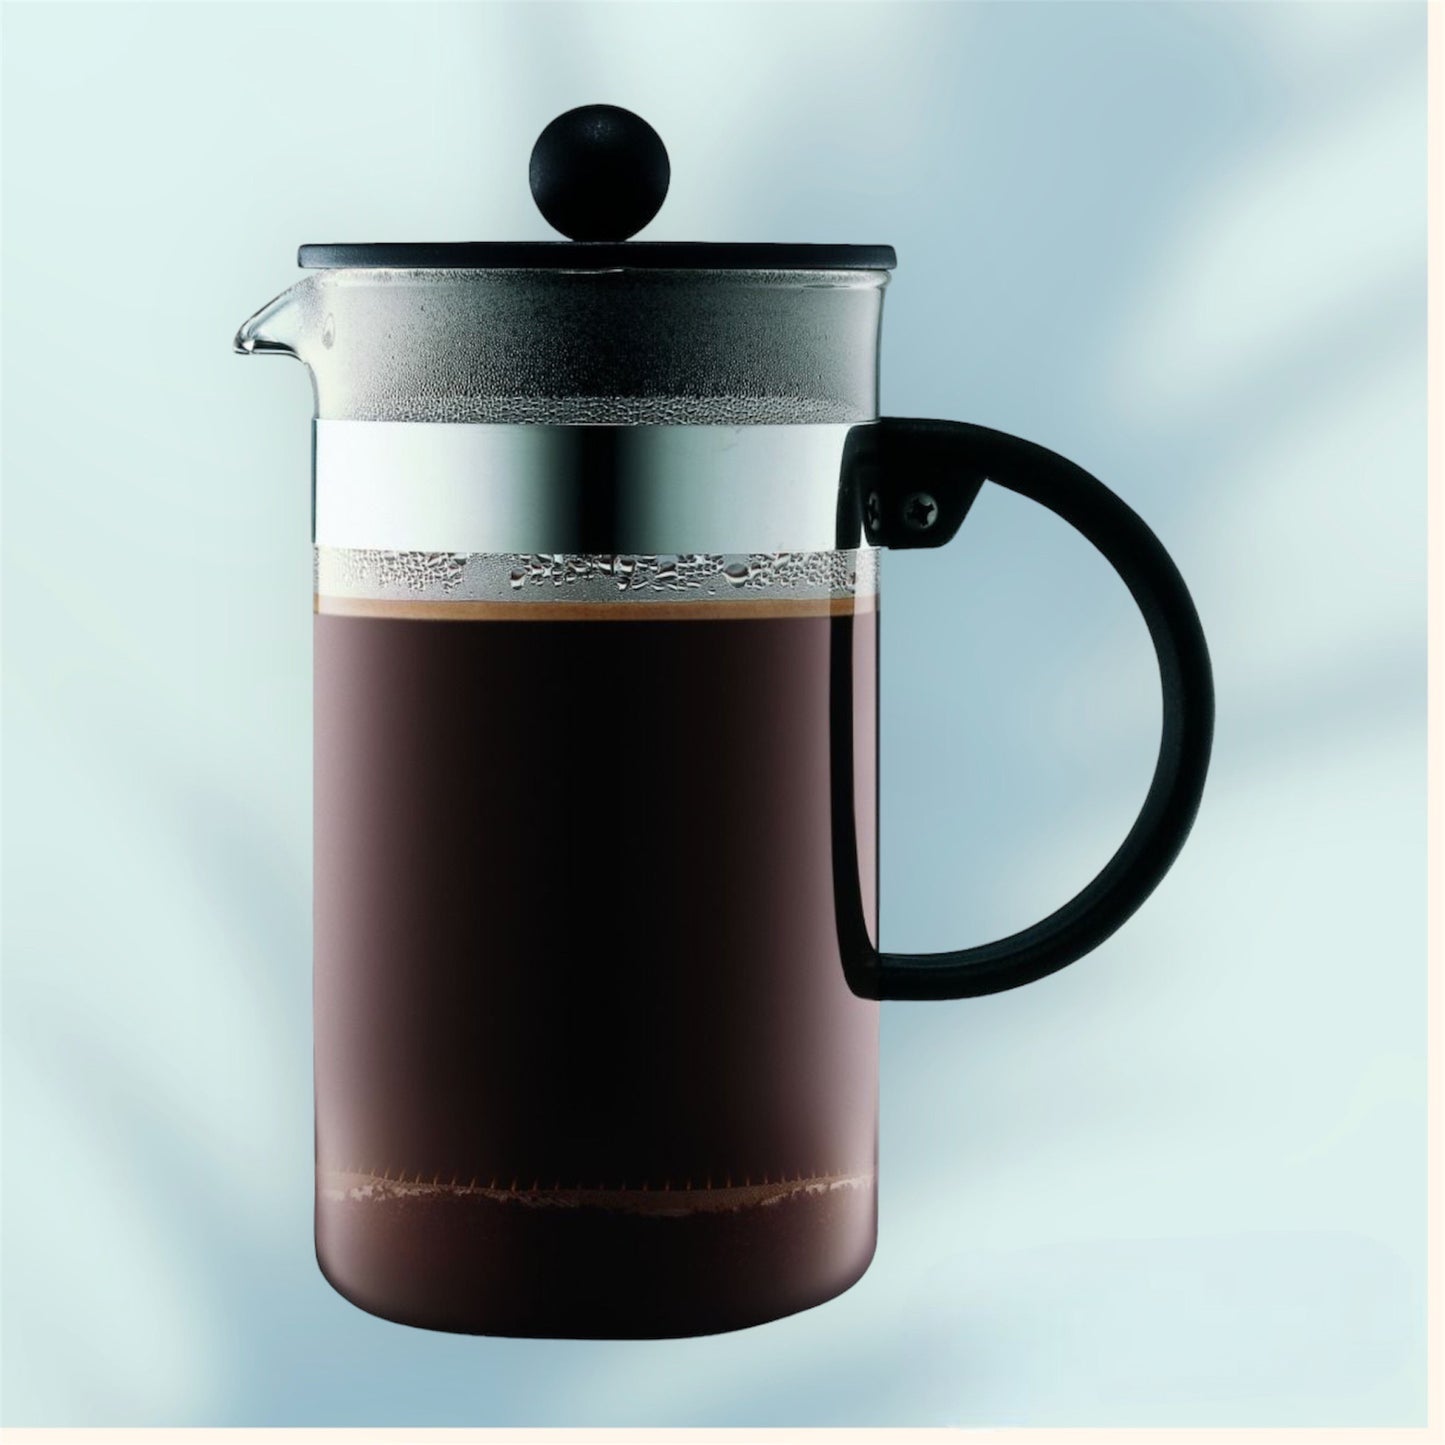 Bodum Coffee maker 8 cup 1.0L 34 oz